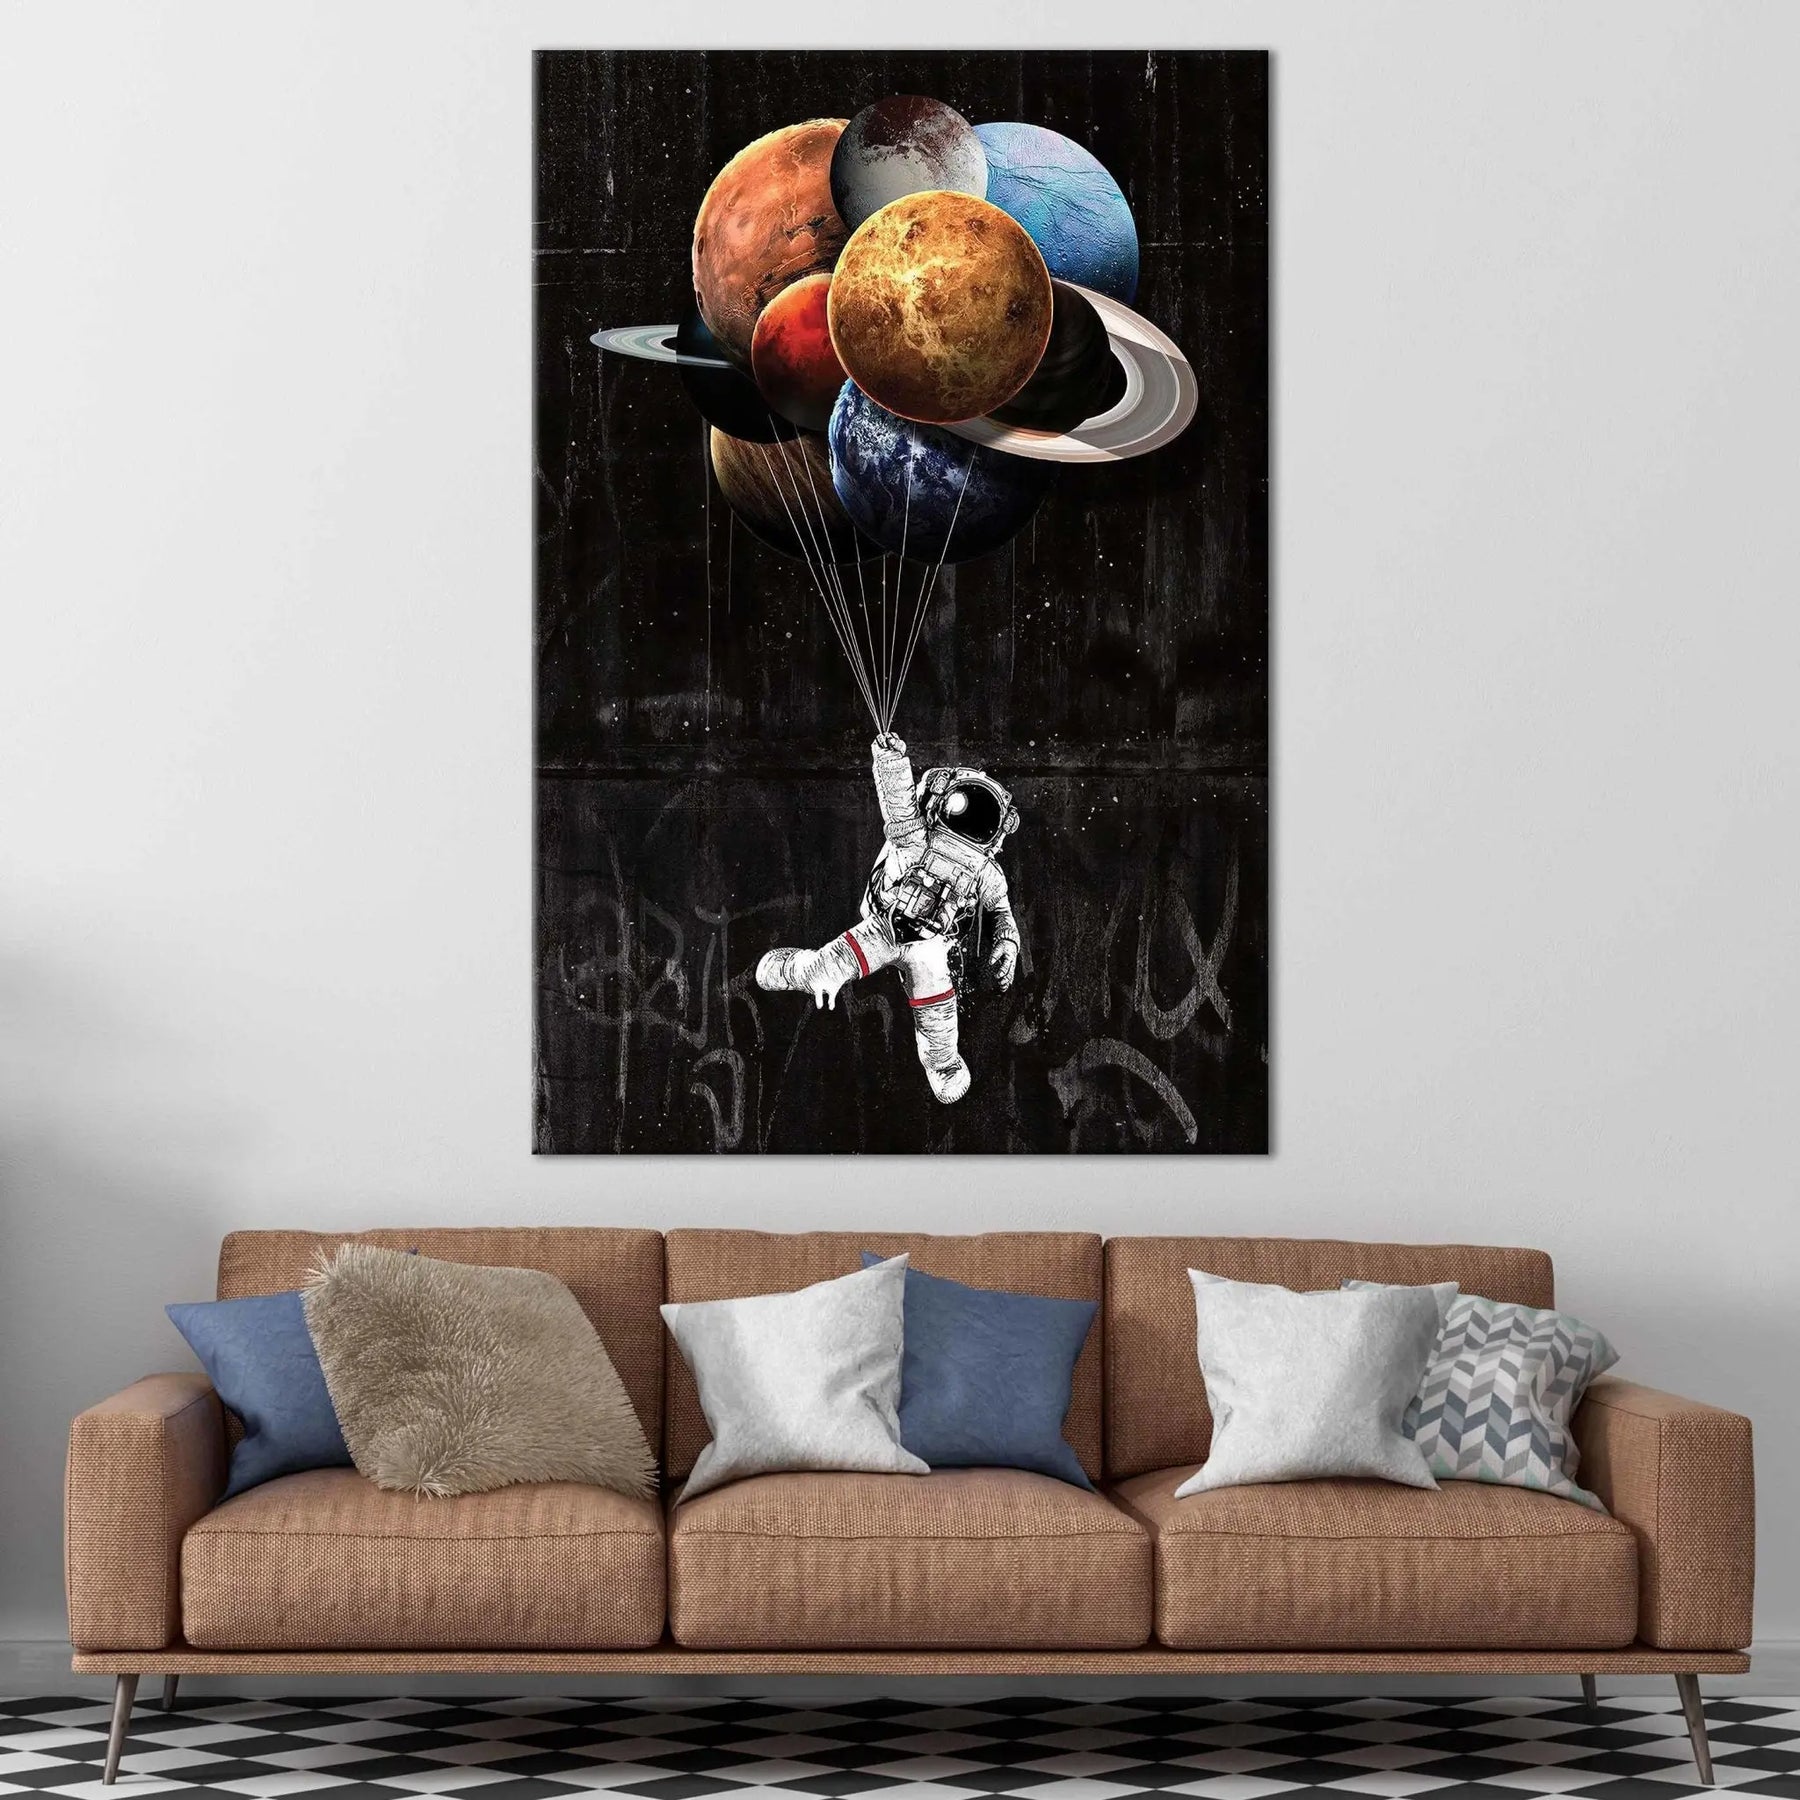 "SPACERANGER" - Art For Everyone